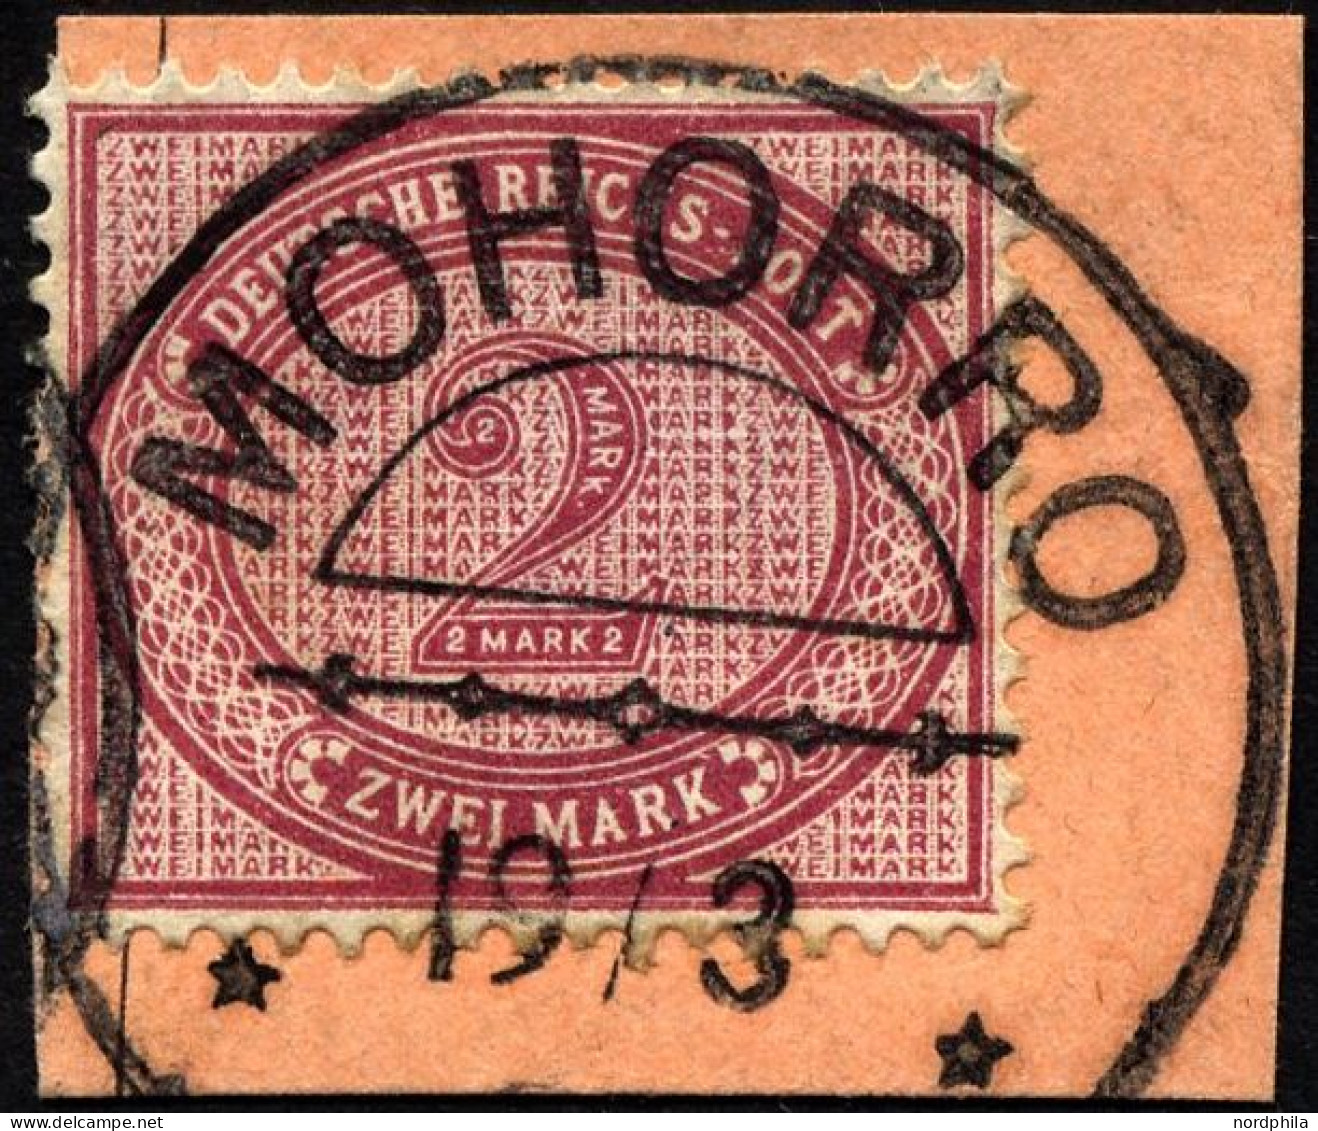 DEUTSCH-OSTAFRIKA VO 37e BrfStk, 1891, 2 M. Dunkelrotkarmin, Stempel MOHORRO, Postabschnitt, Pracht - África Oriental Alemana